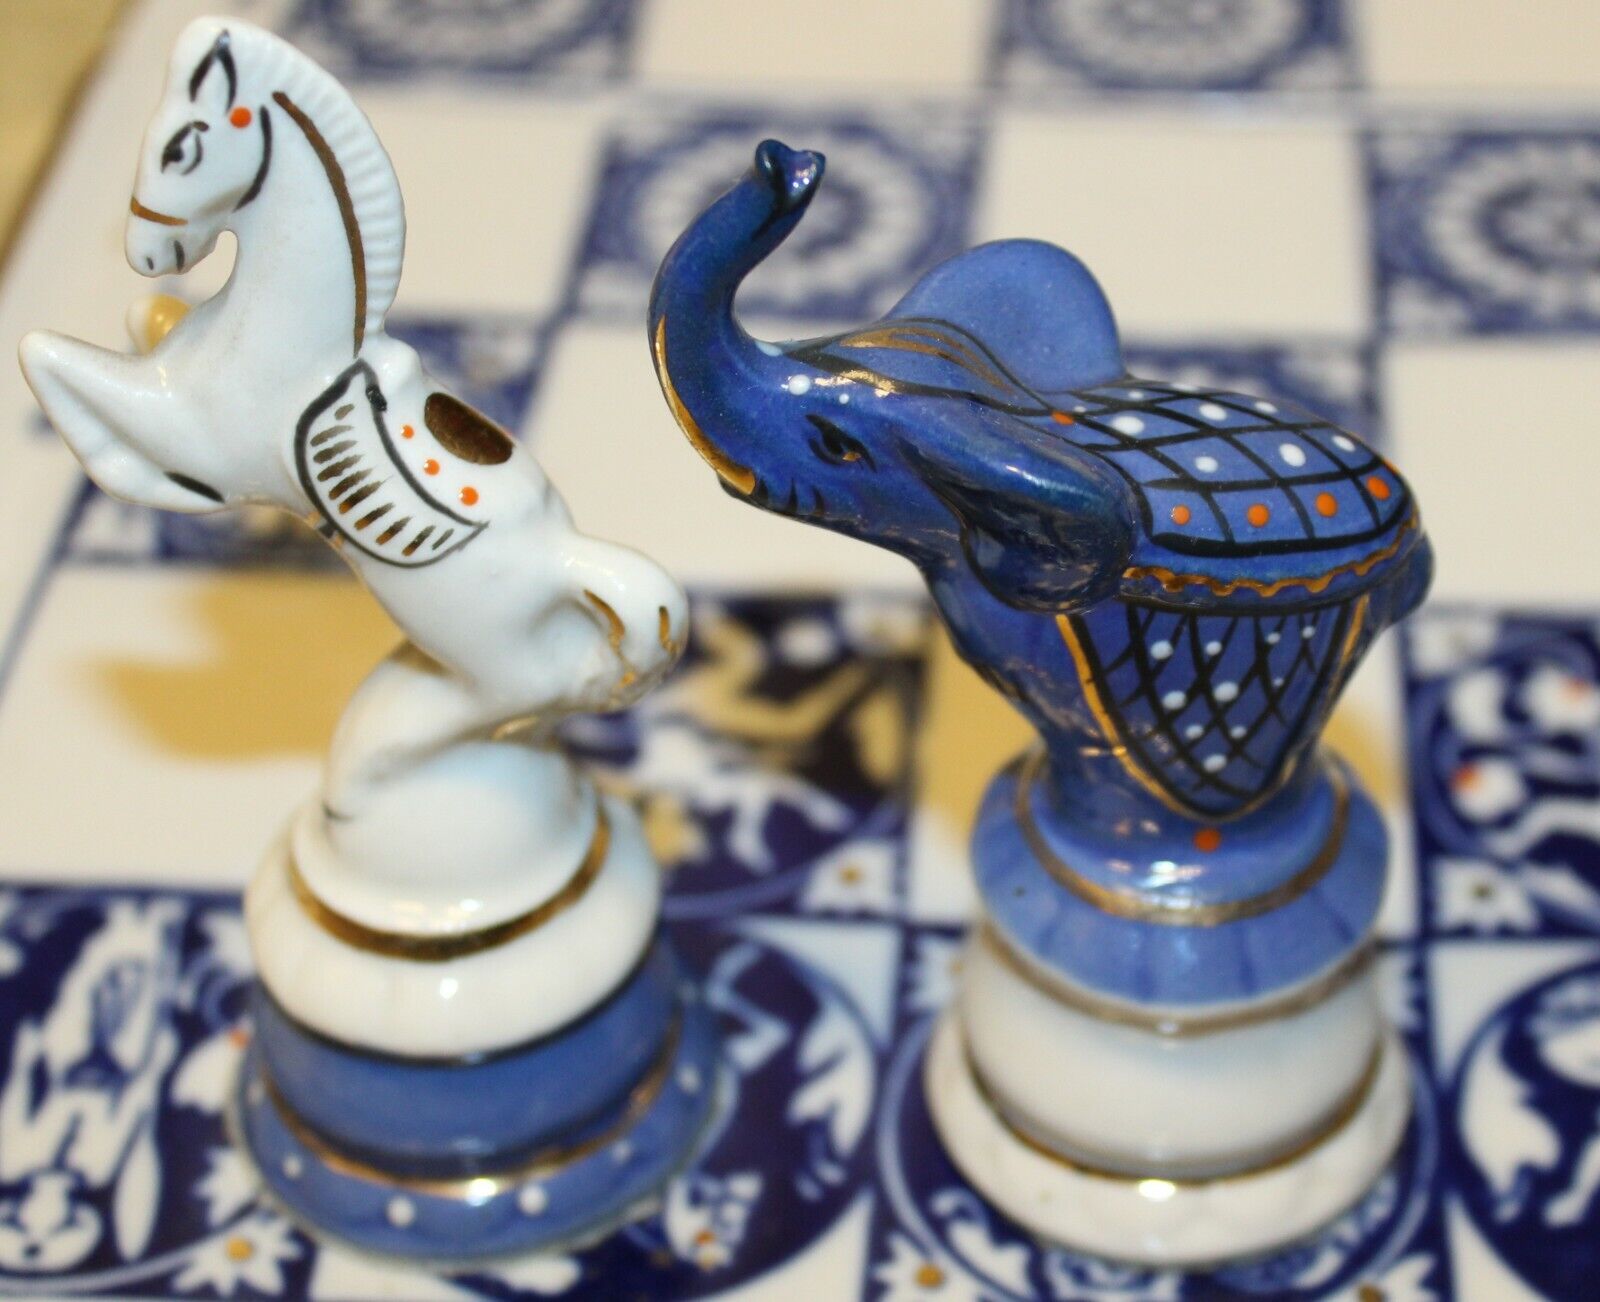 11592.Russian Collectible Porcelain Chess Set. Kuzbas. 1970-s